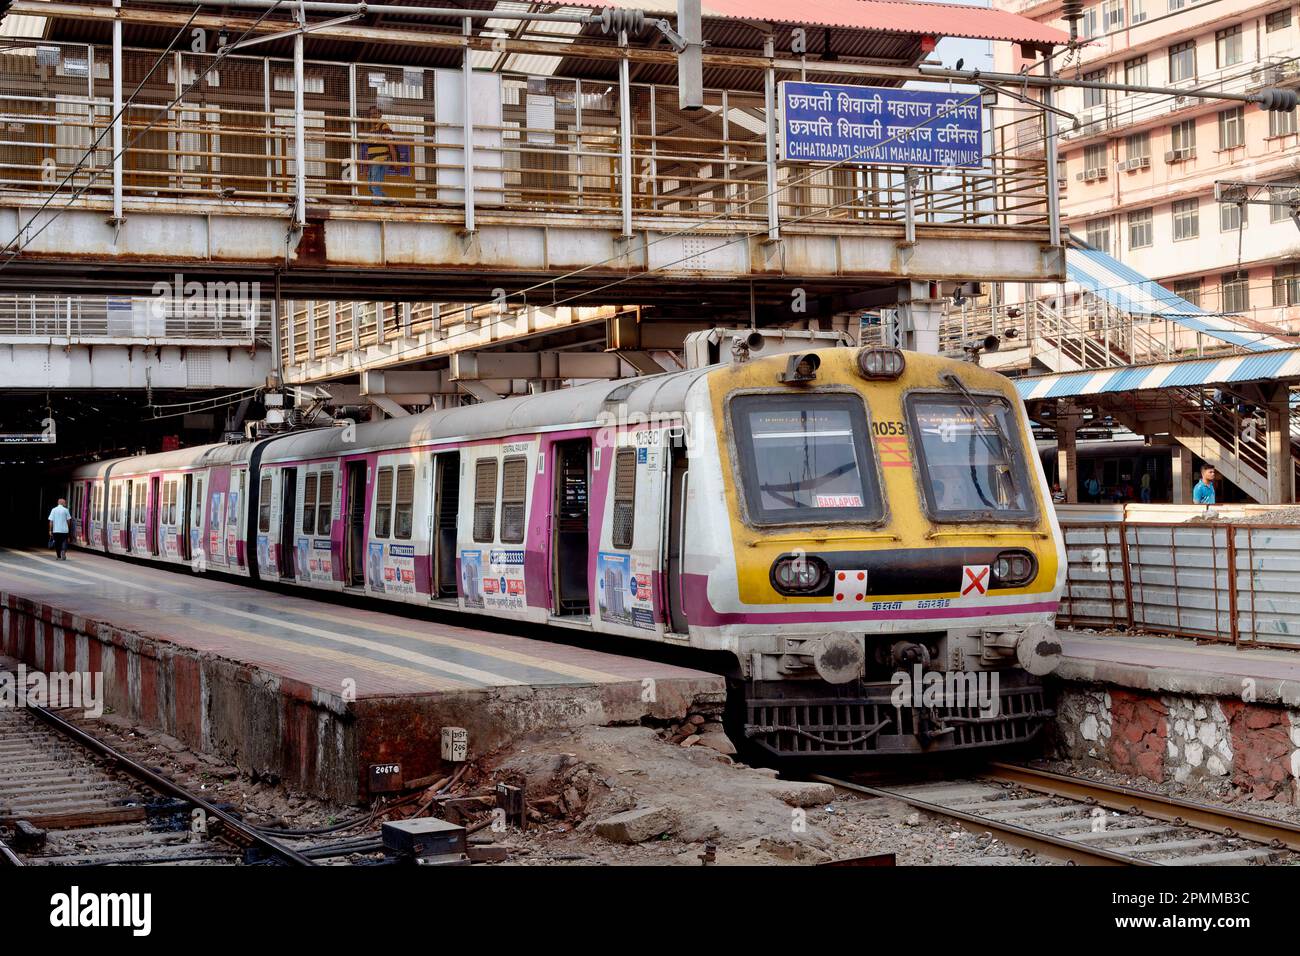 A local (suburban) train of the Central Railways line halted at Chhatrapati Shivaji Maharaj Terminus (CSMT) in Mumbai, India Stock Photo